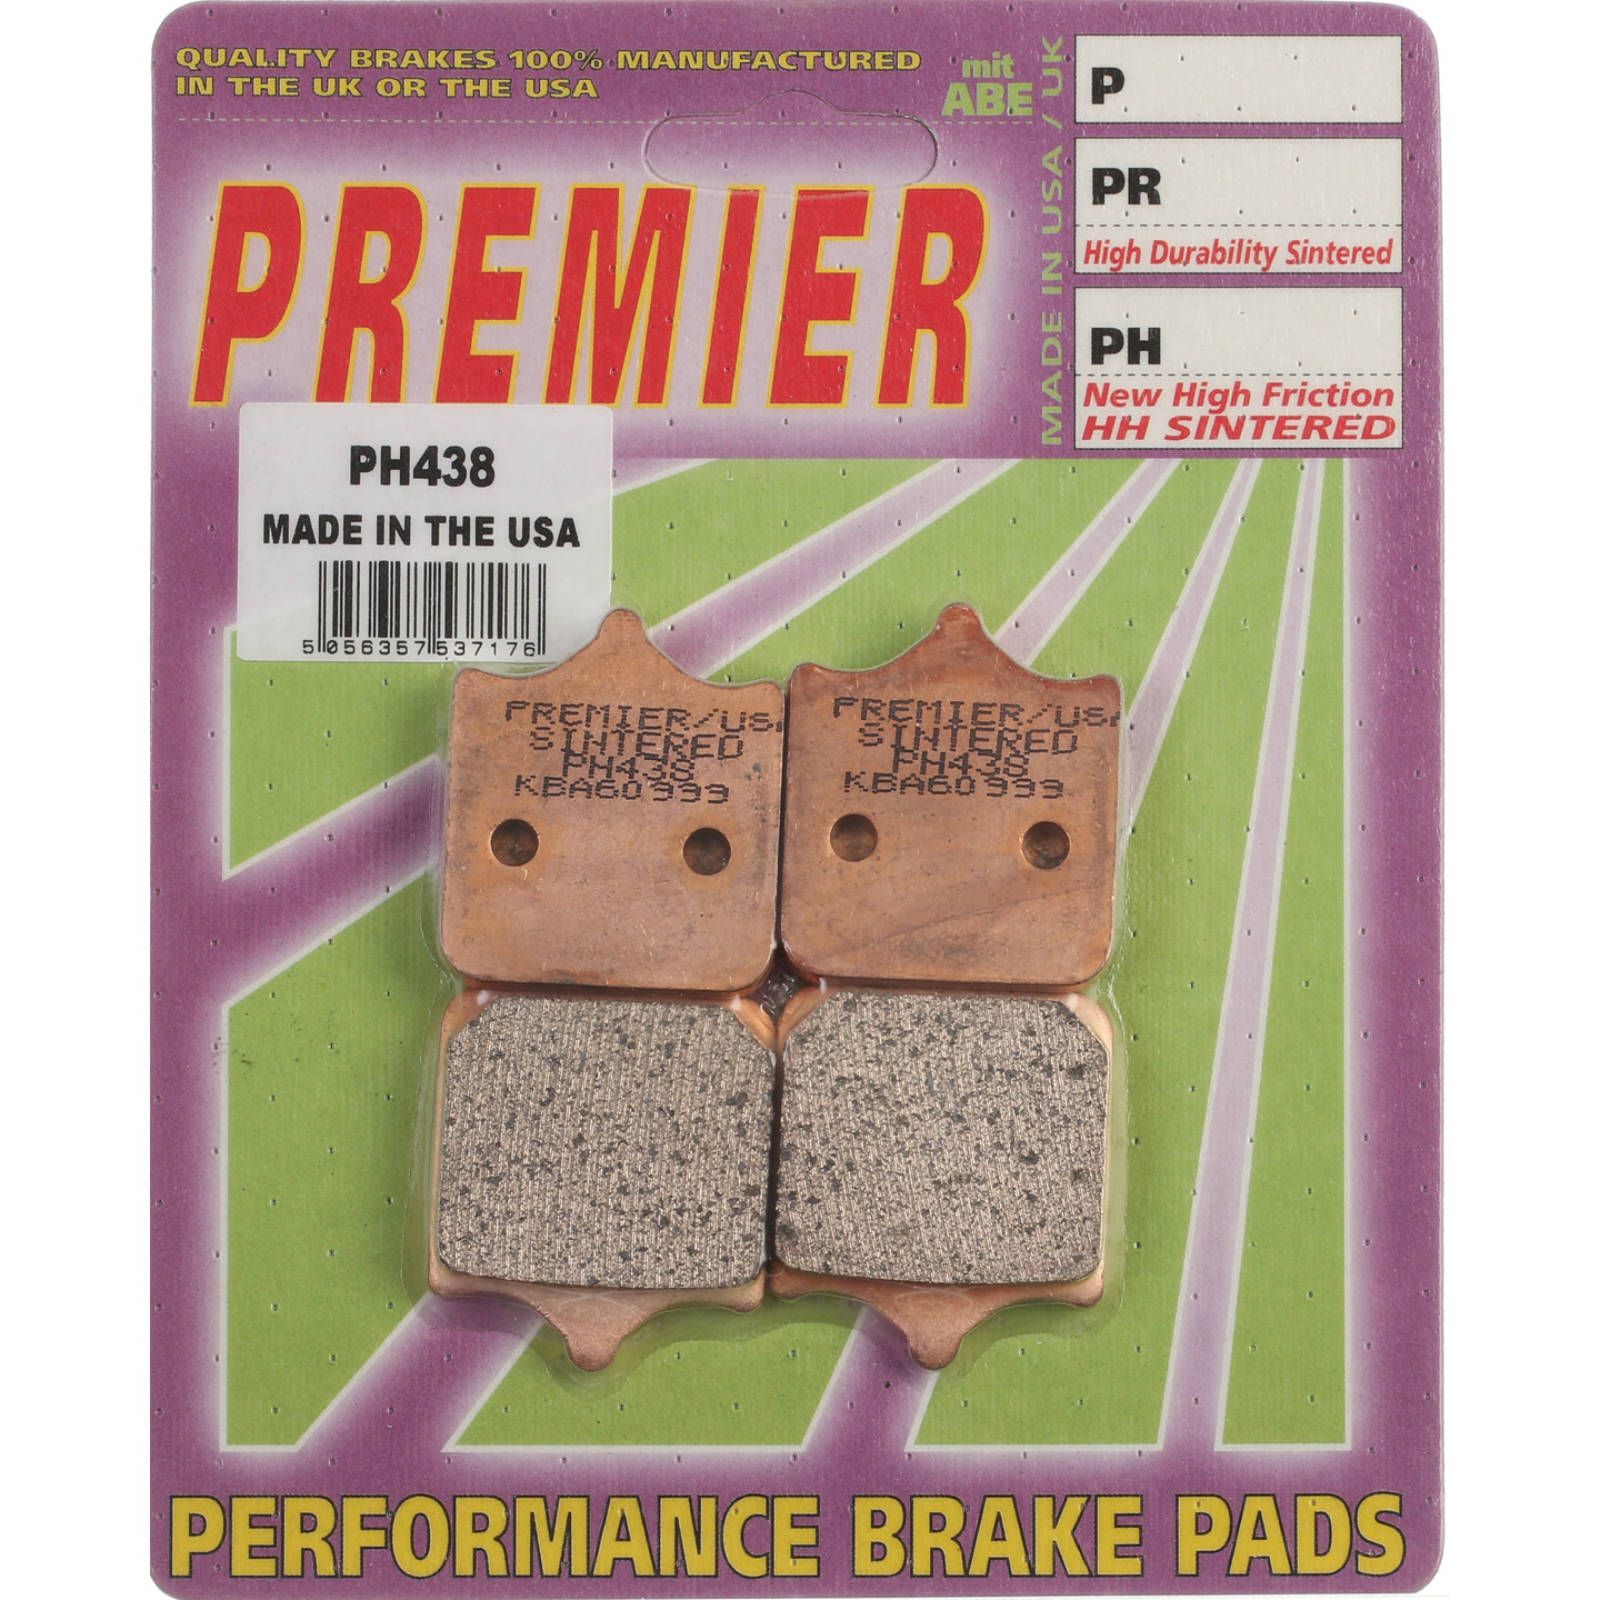 New PREMIER Brake Pad - PH Street Sintered (GF304S3) #PBPH438